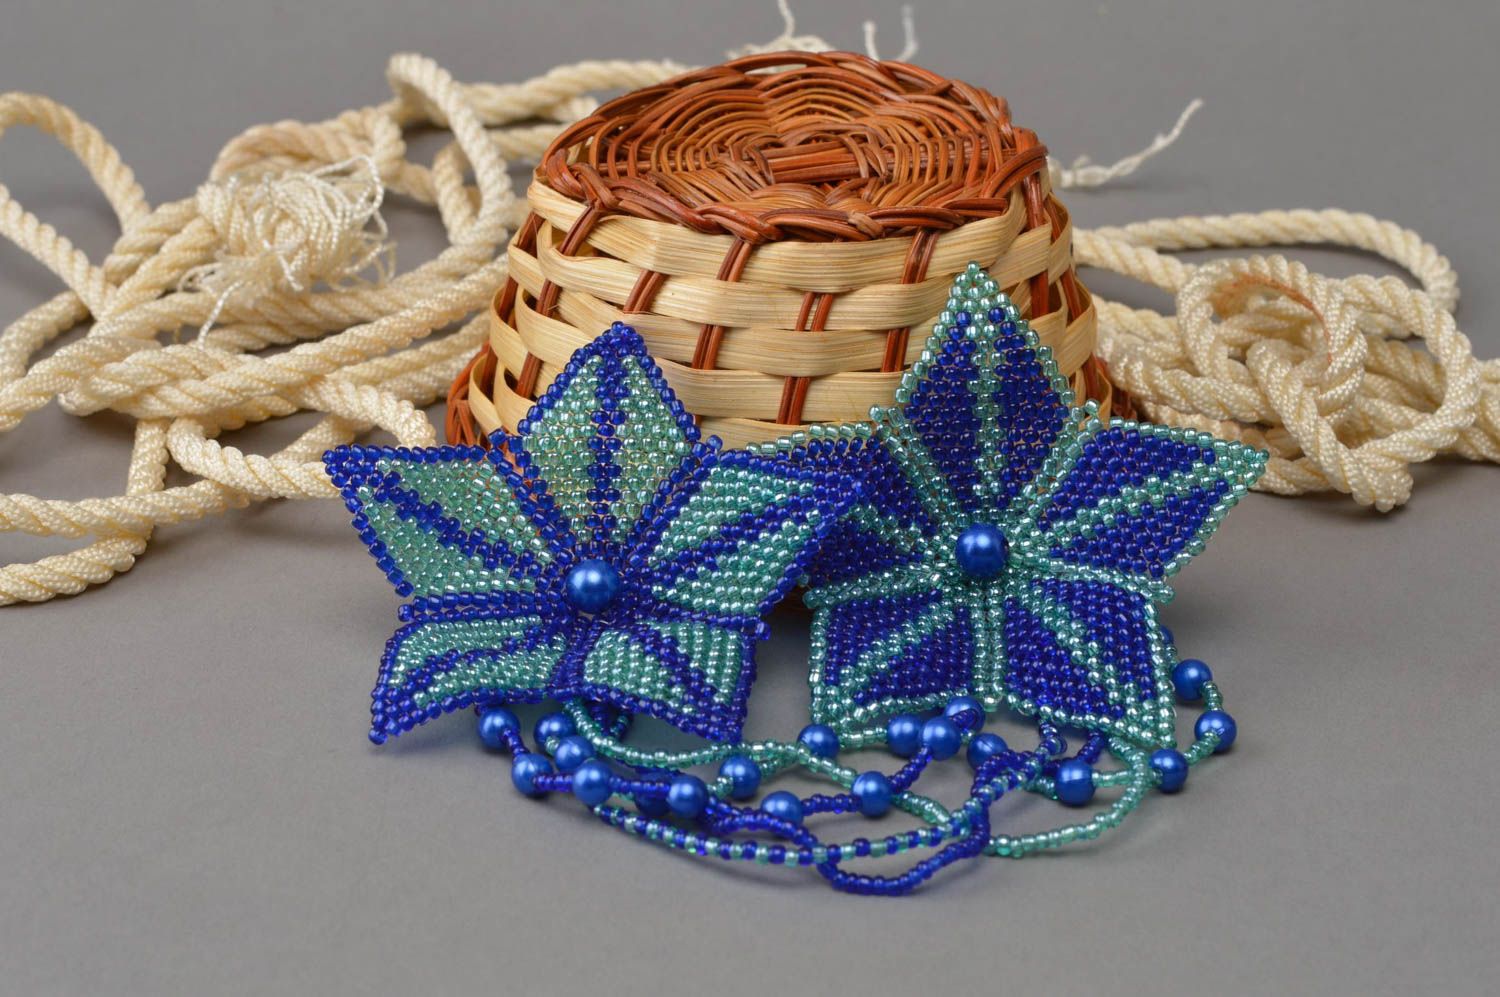 Handmade brooch beaded jewelry weaving technique gift ideas for women photo 1